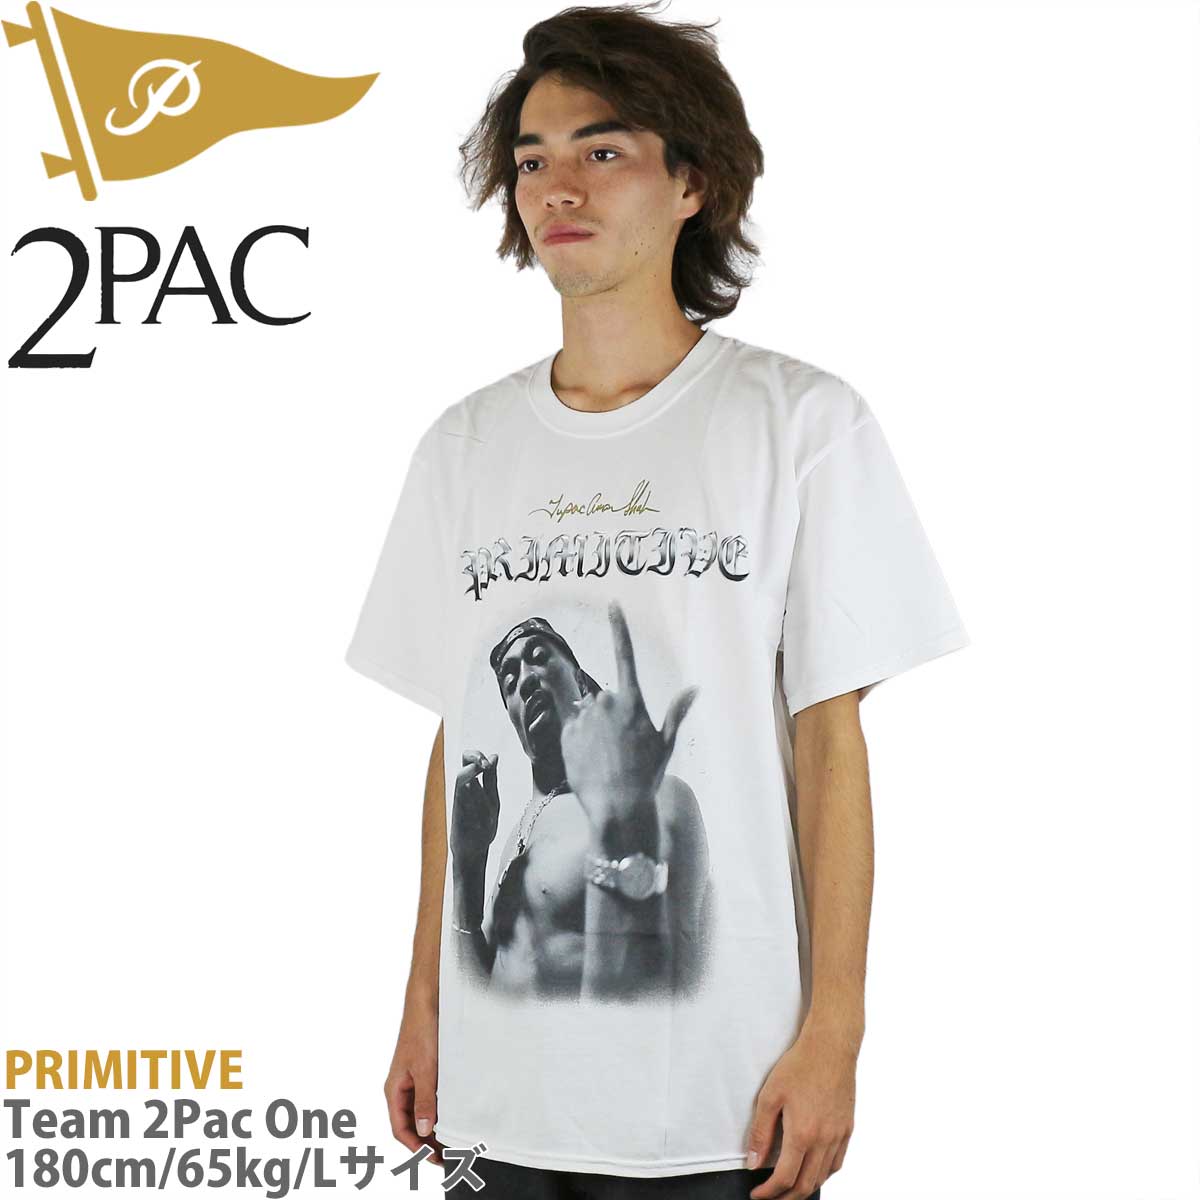 Primitive x 2PAC One T-Shirt プリミティブ ツーパック コラボ Tee T